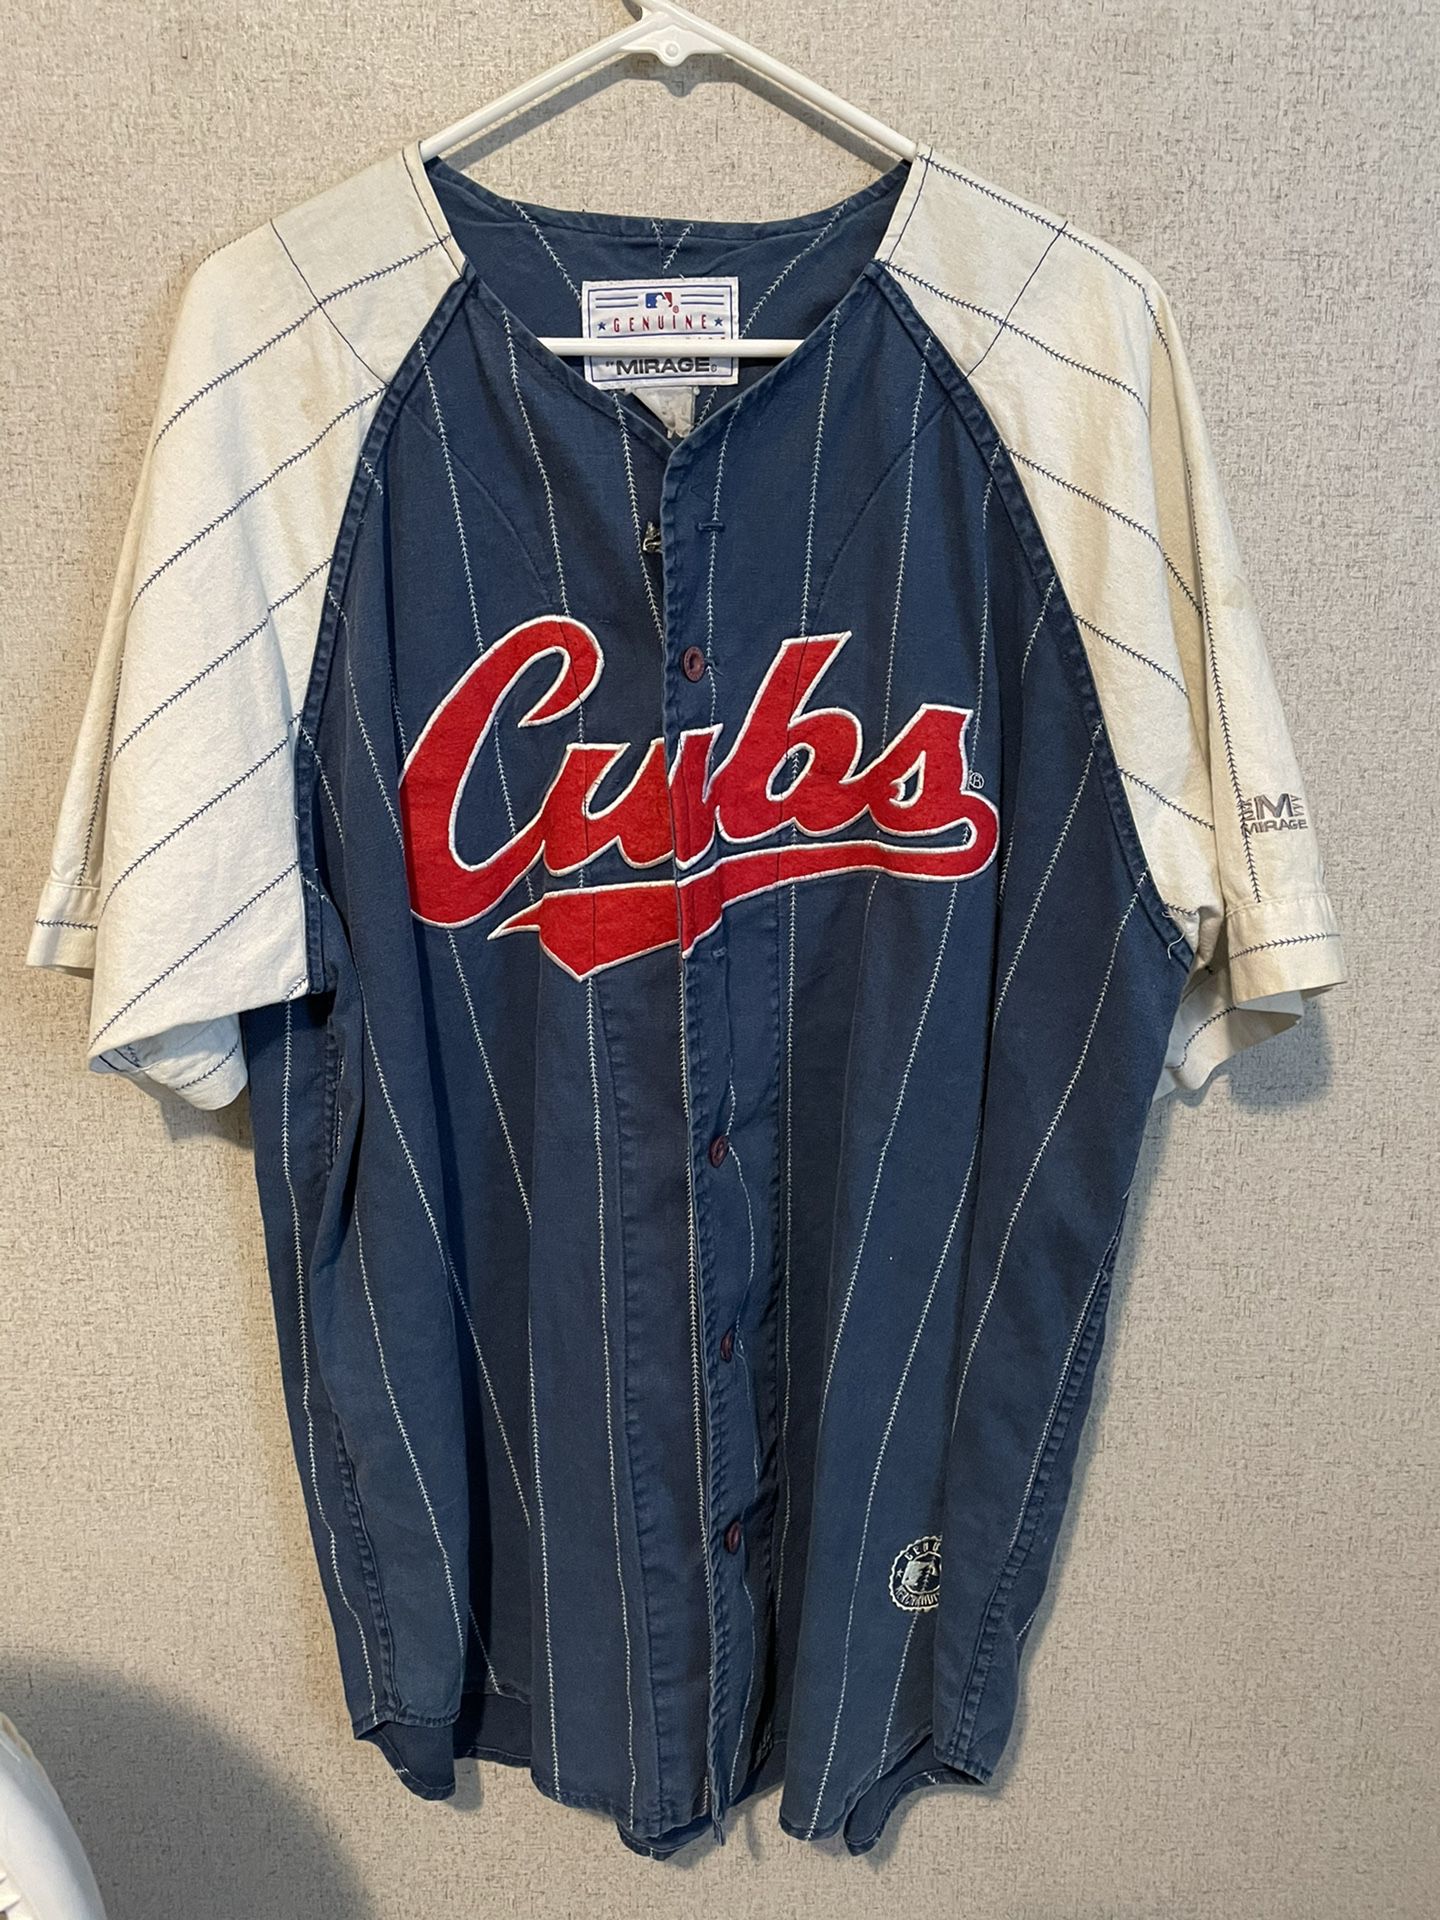 1979 Cubs jersey